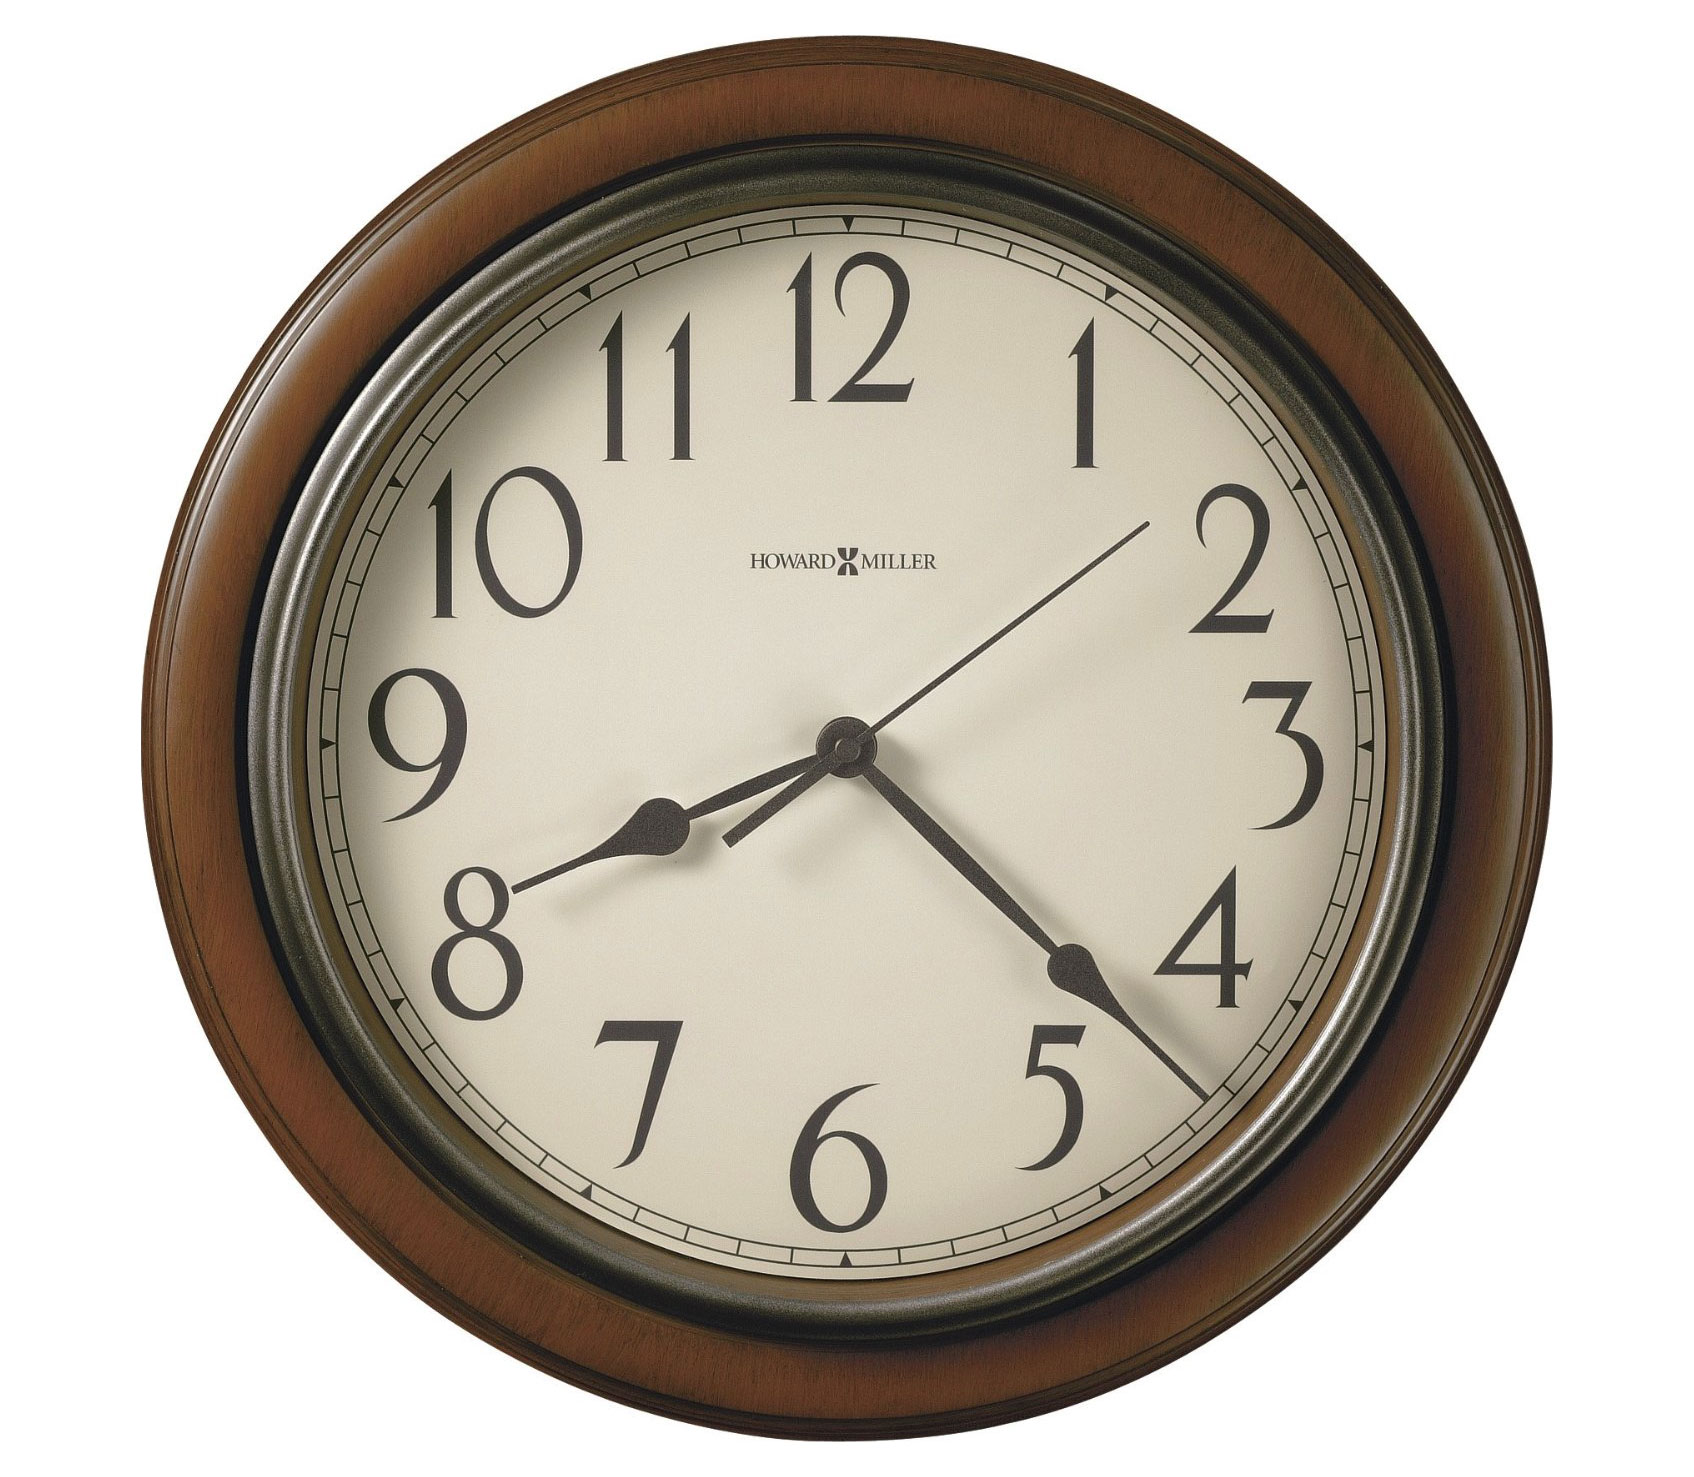 Модели часов настенных. Часы Ховард Миллер 620-. Настенные часы Говард Миллер. Деревянные часы Ховард Миллер. Howard Miller часы настенные ank625-372.